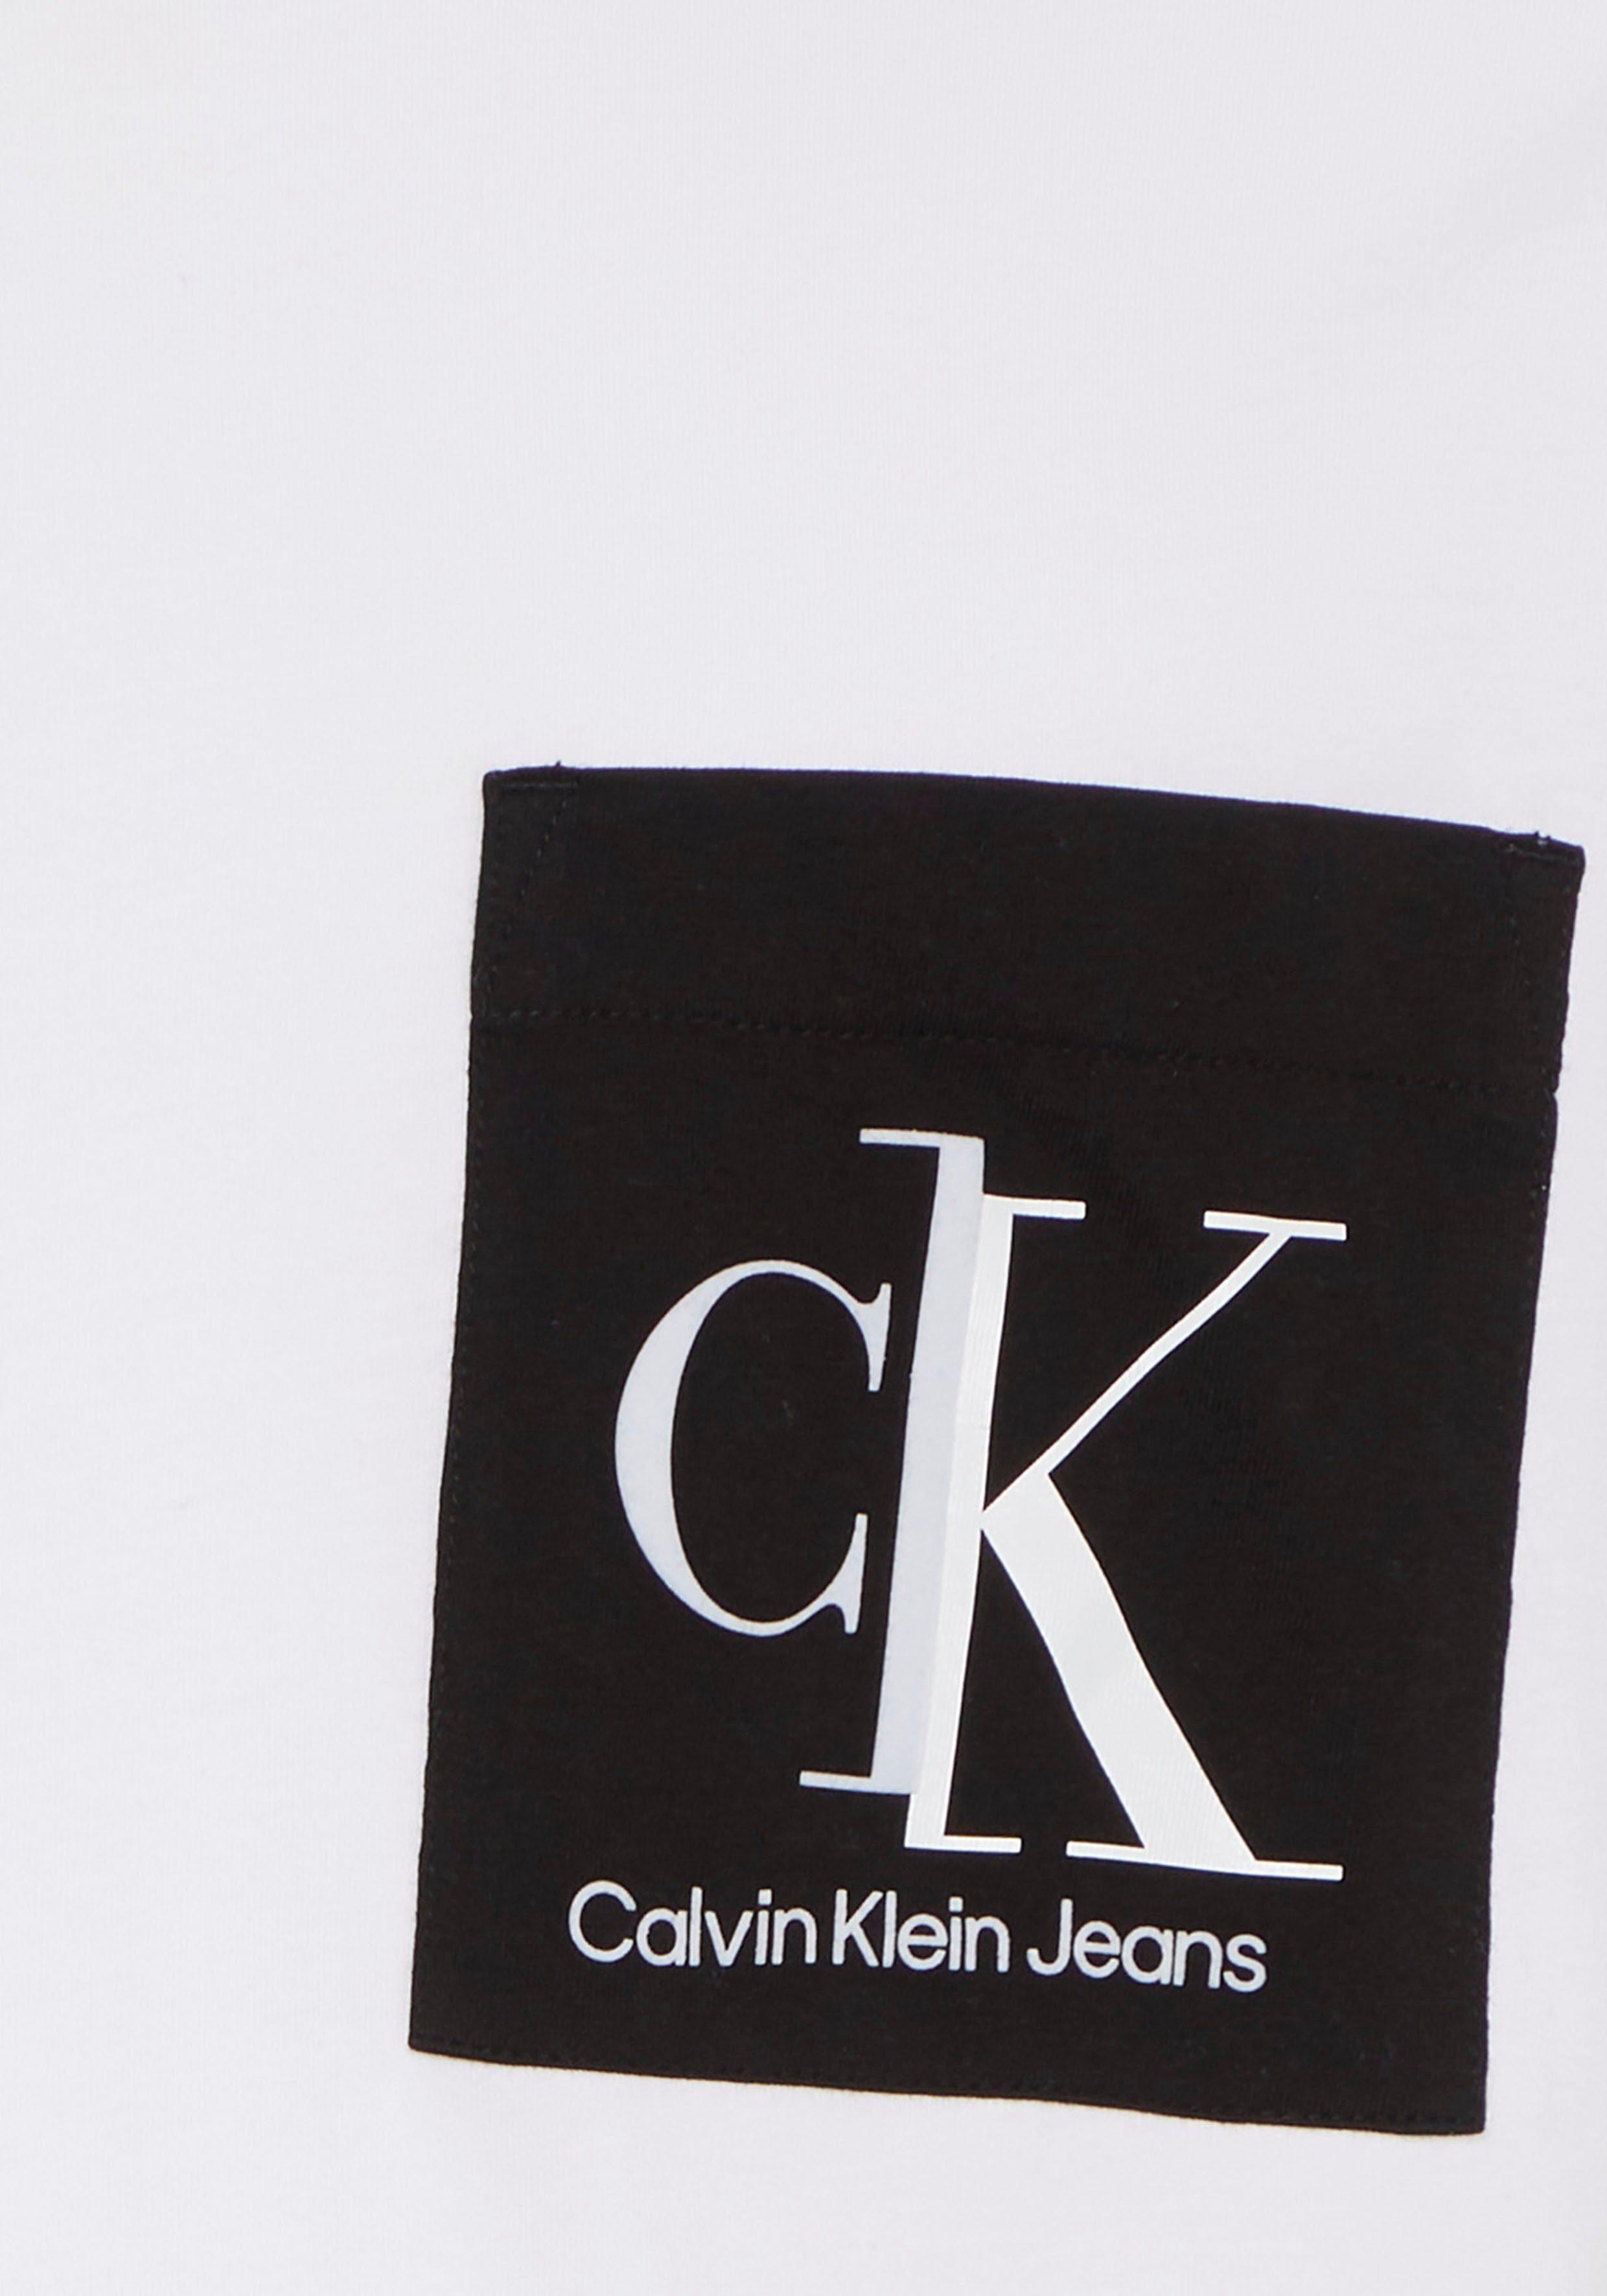 Herren Shirts Calvin Klein Jeans T-Shirt SPLICED CK POCKET TEE